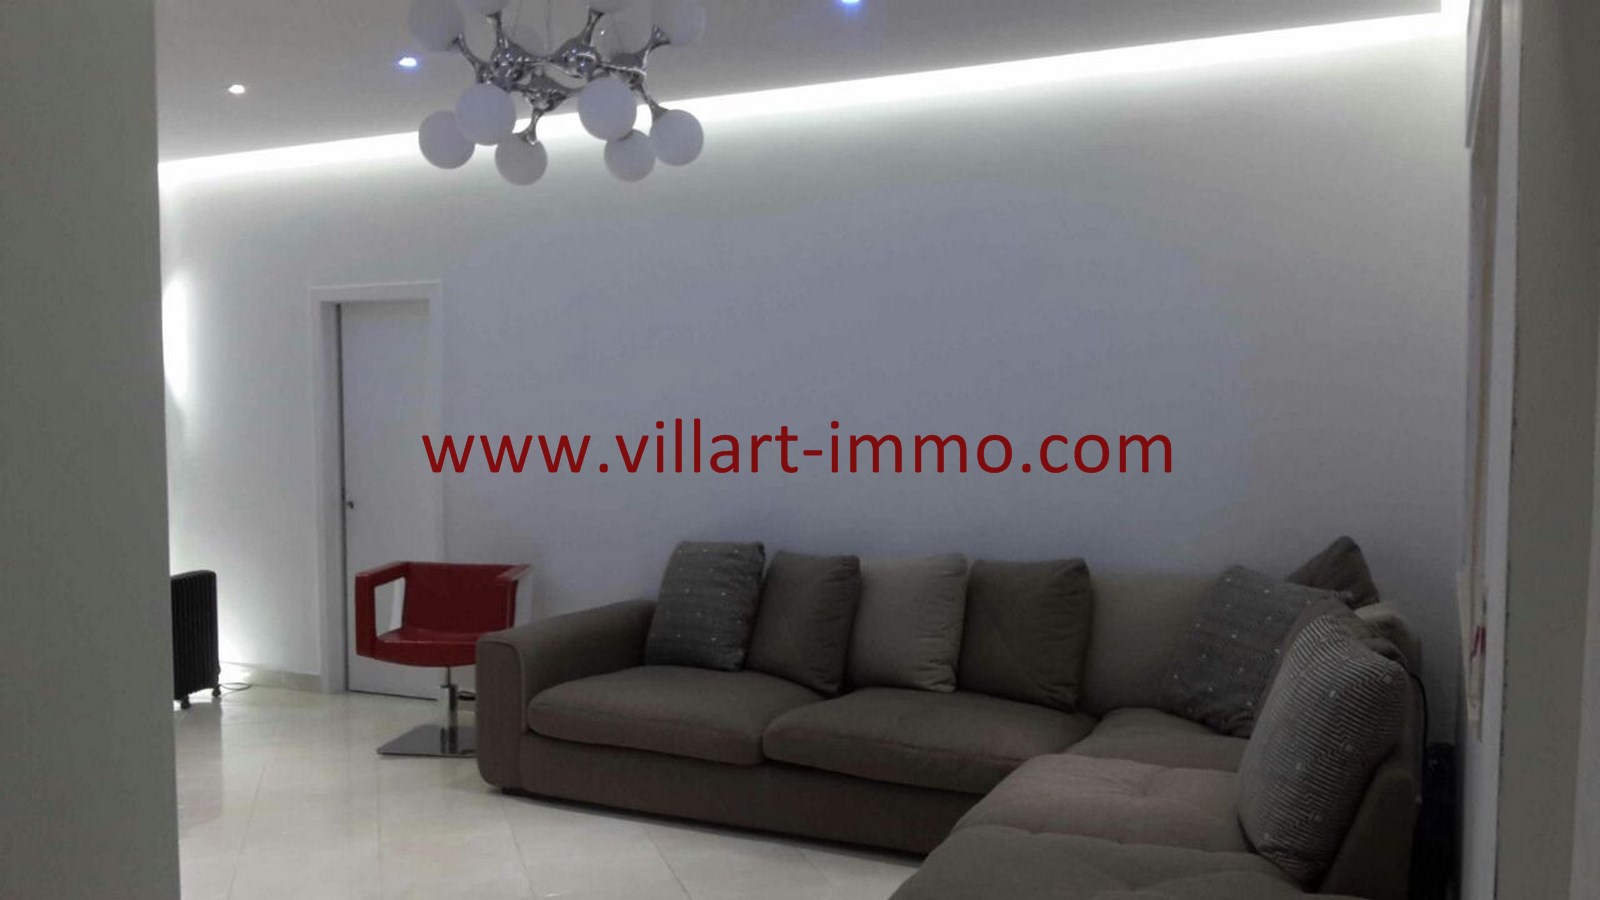 3-Vente-Appartement-Tanger-Malabata-Salon 2-VA490-Villart Immo (Copier)